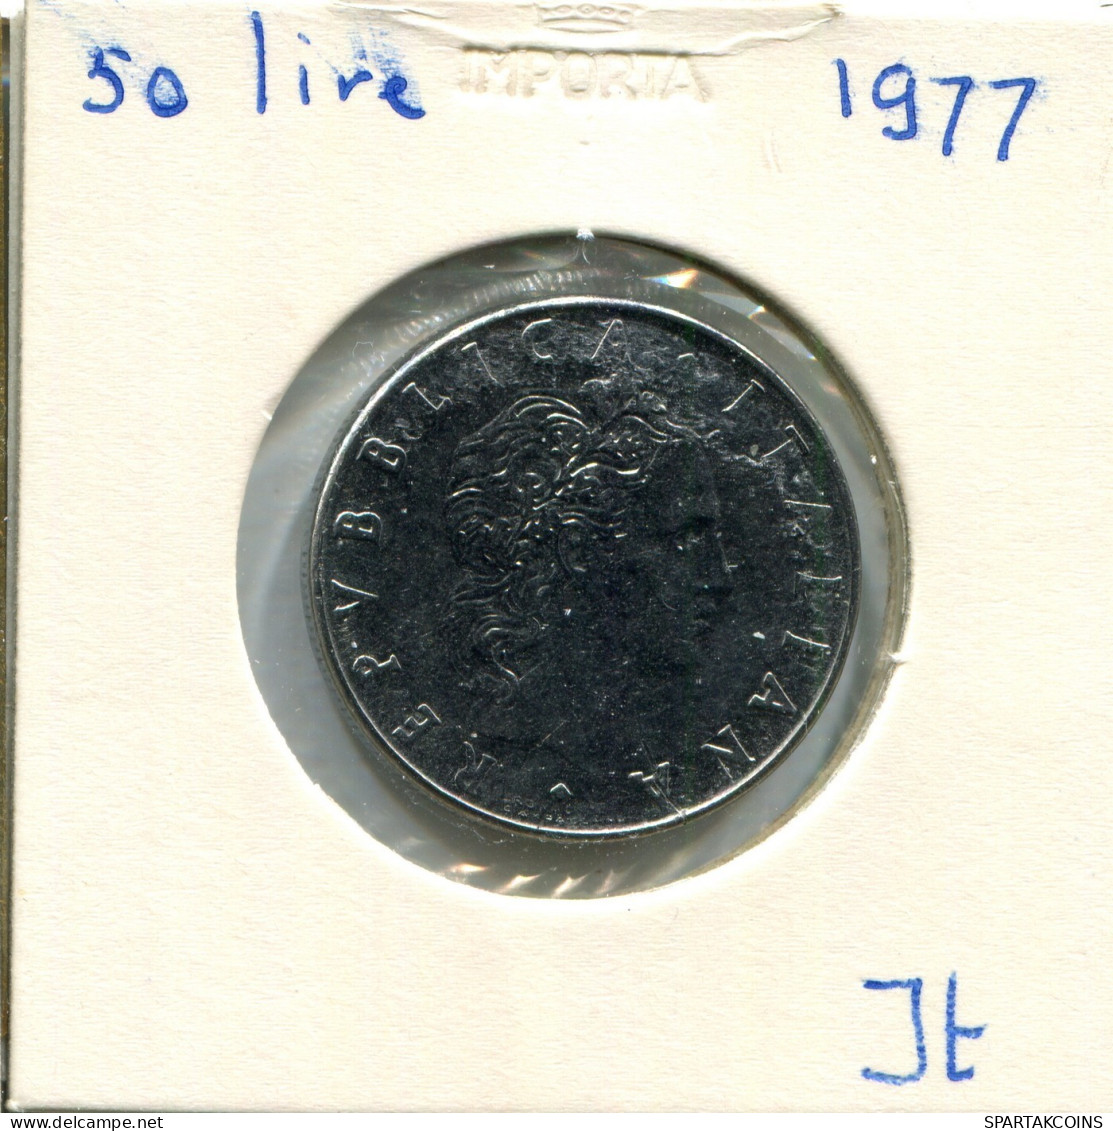 50 LIRE 1977 ITALY Coin #AW764.U.A - 50 Lire